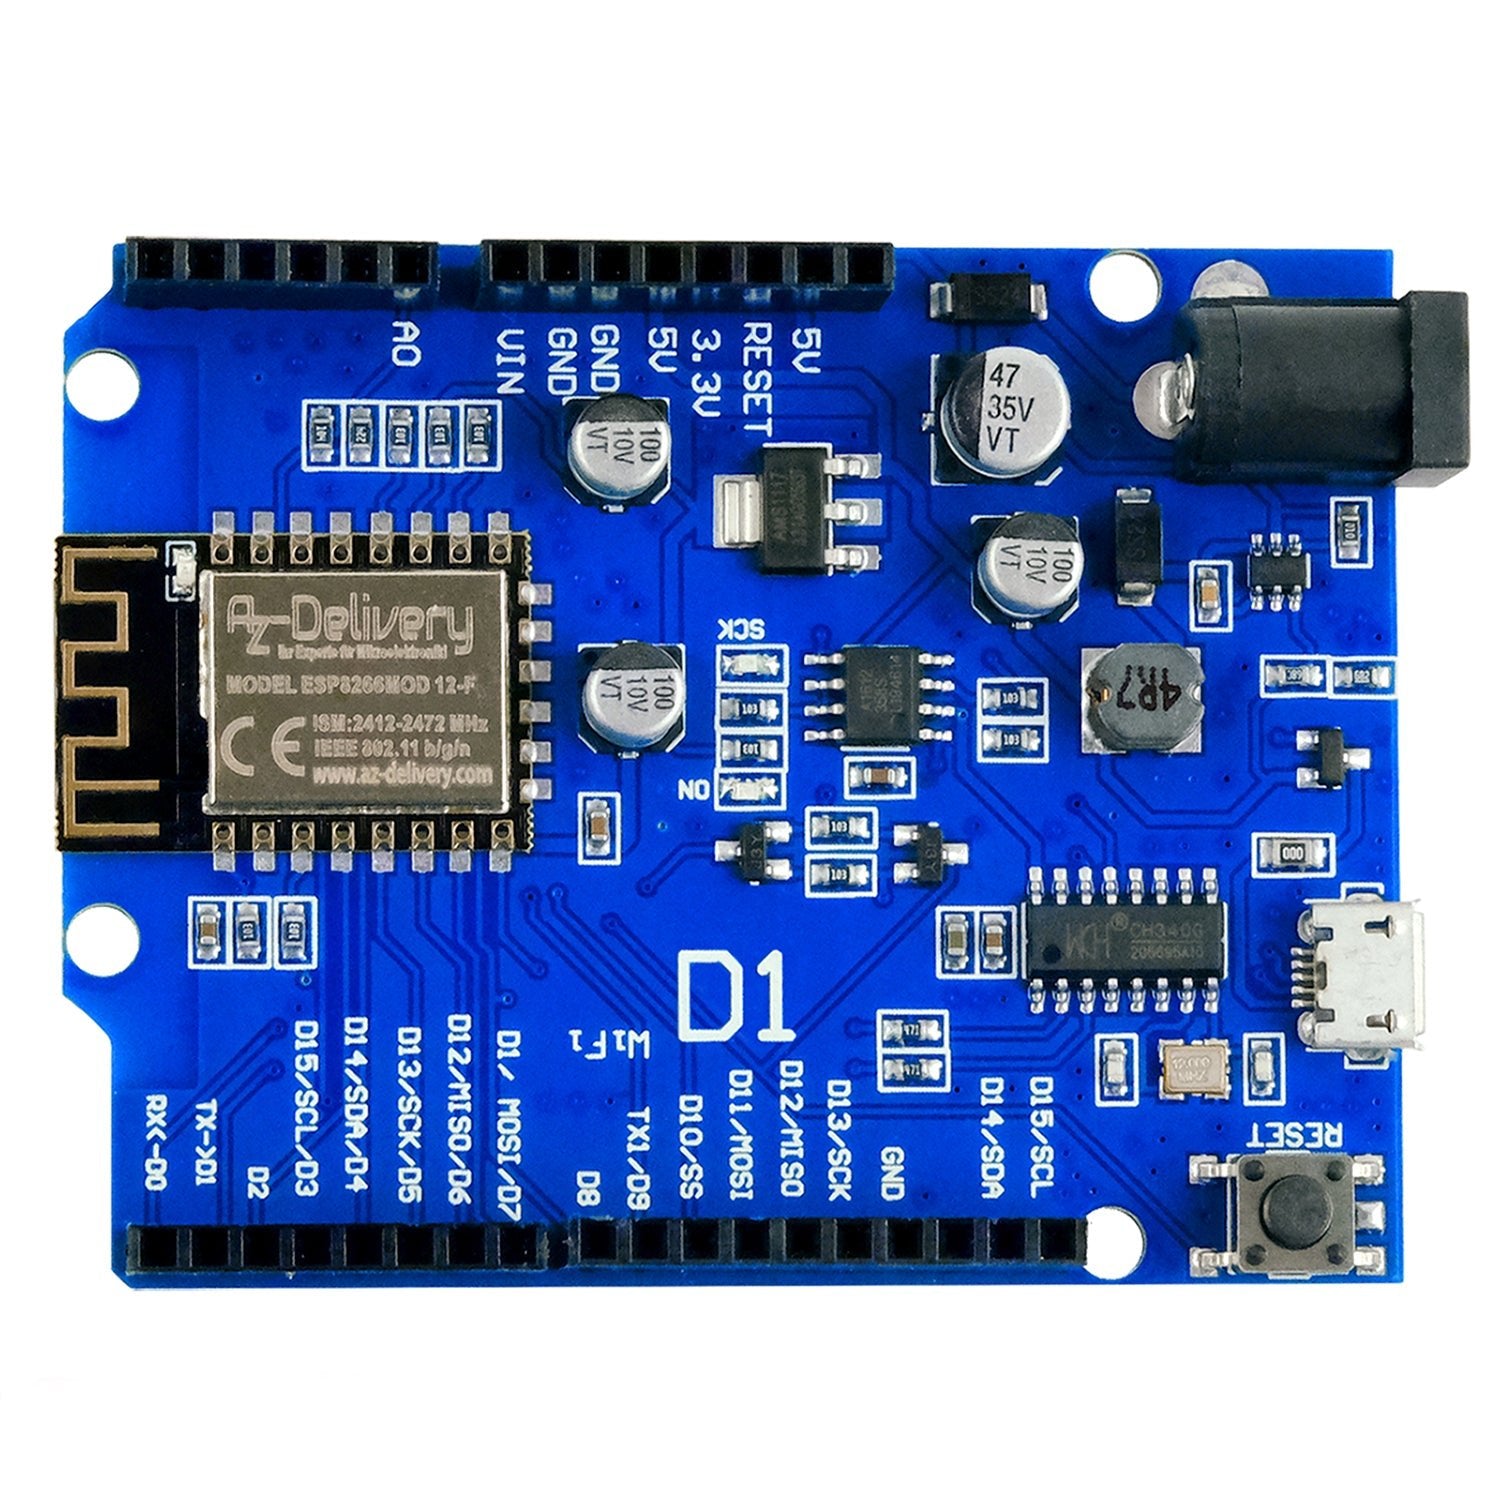 D1 Board NodeMCU ESP8266MOD-12F WiFi Wlan Modul kompatibel mit Arduino - AZ-Delivery